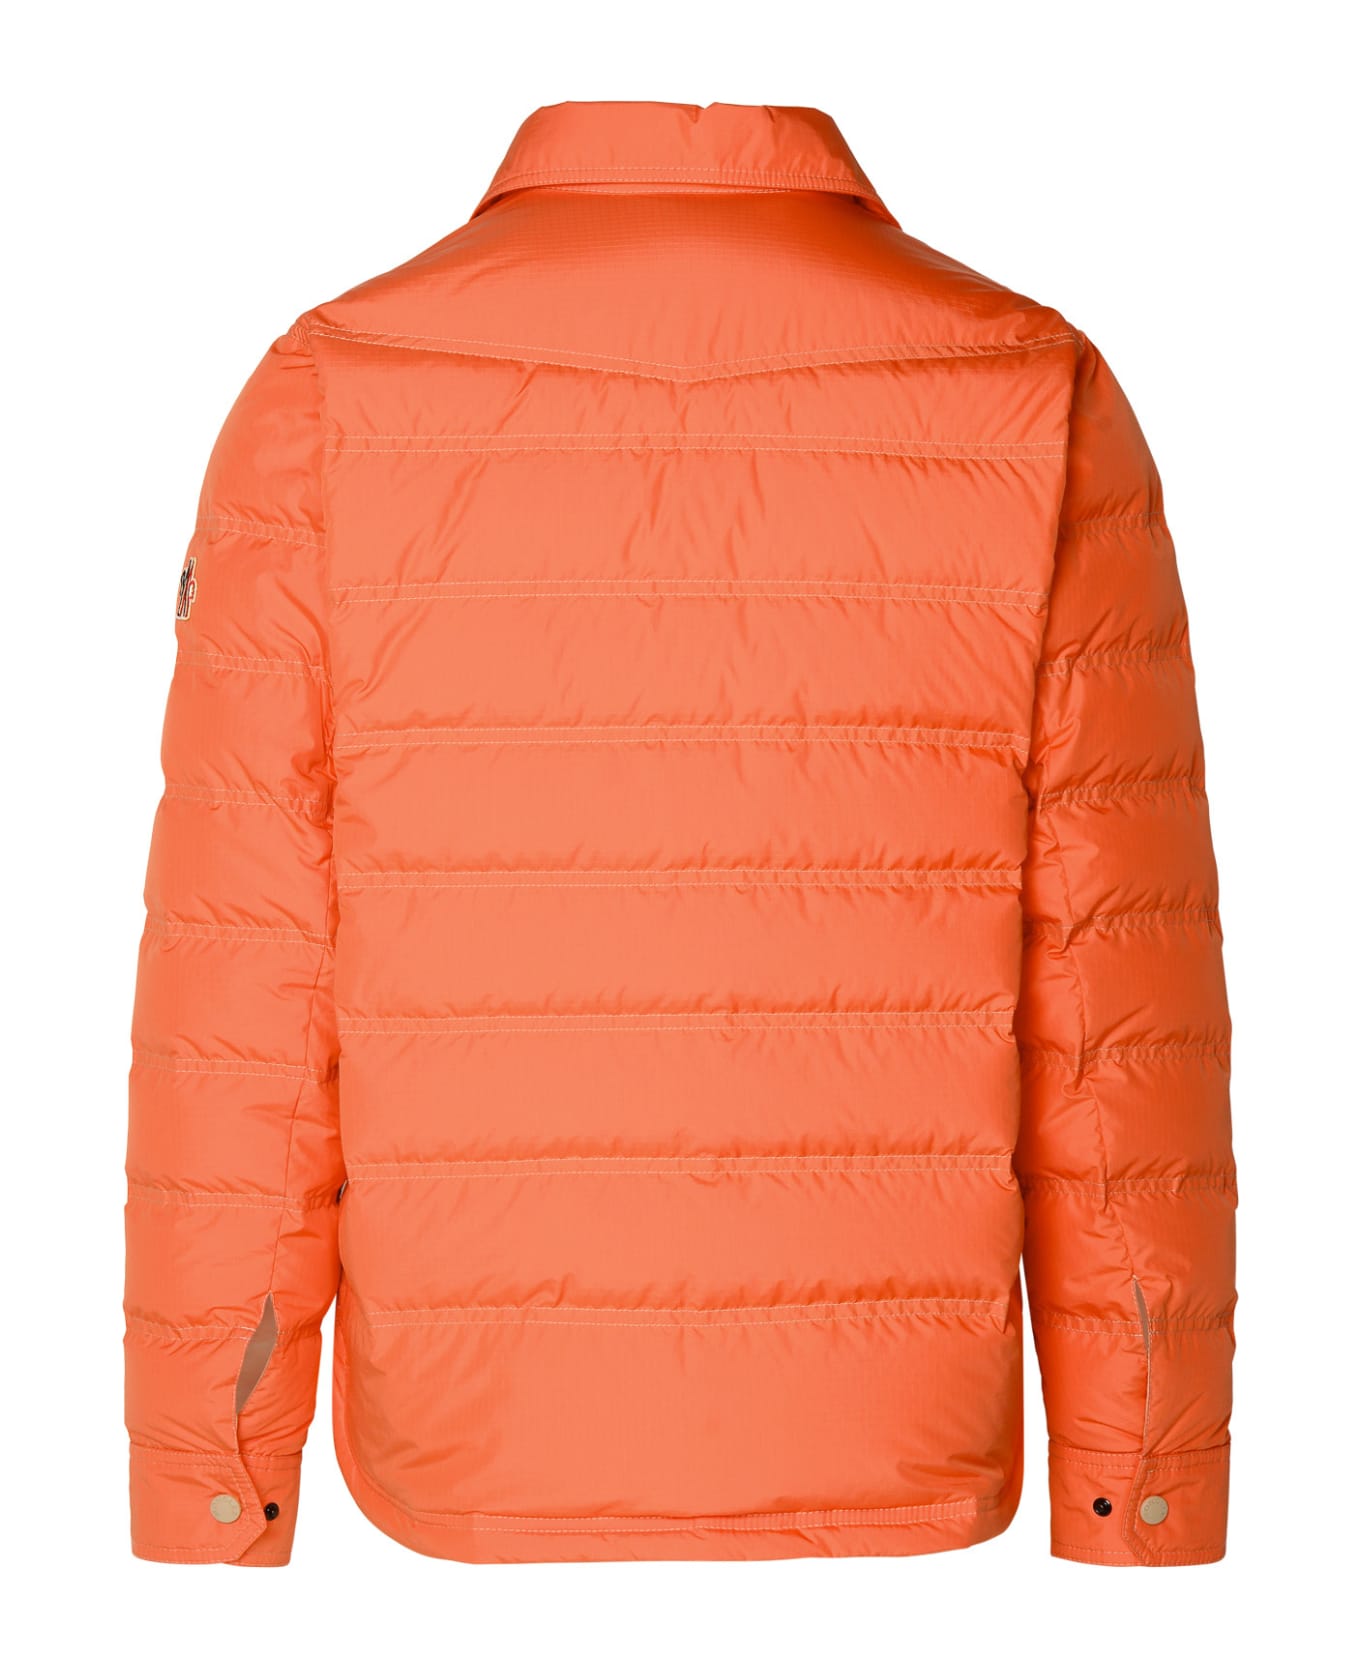 Moncler Grenoble 'lavachey' Orange Polyester Down Jacket - ORANGE ダウンジャケット